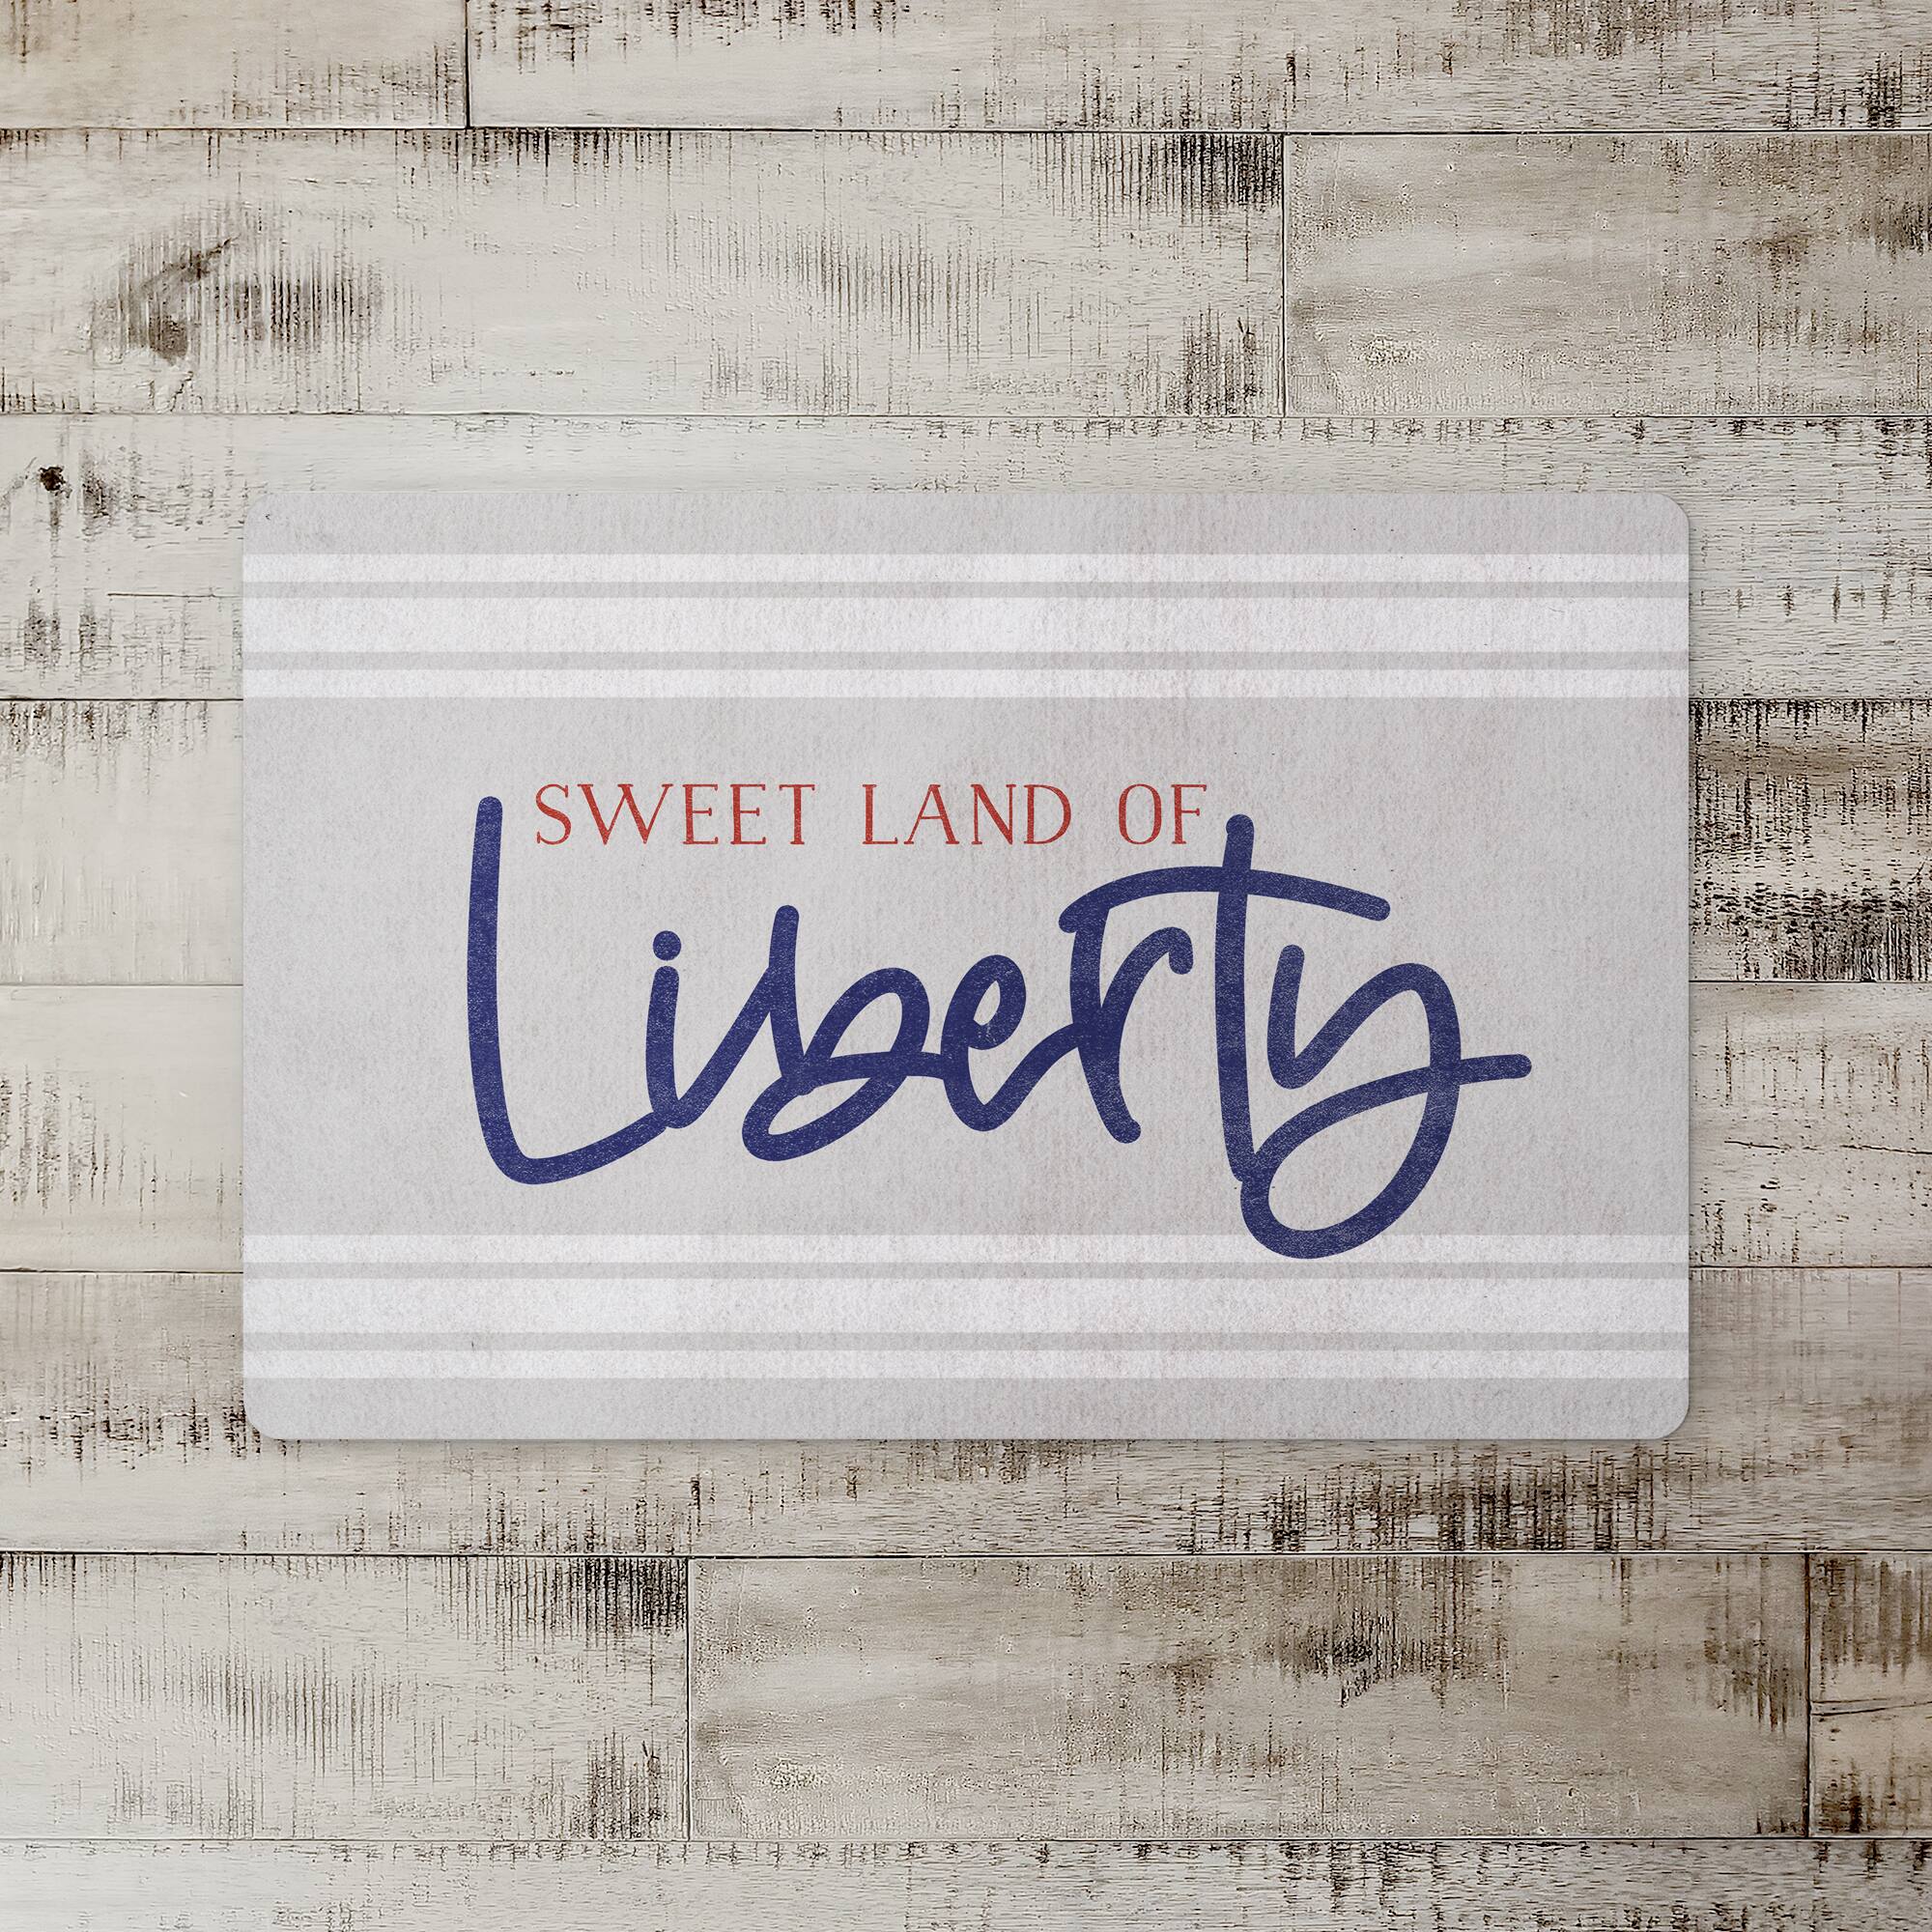 Sweet Land of Liberty Floor Mat